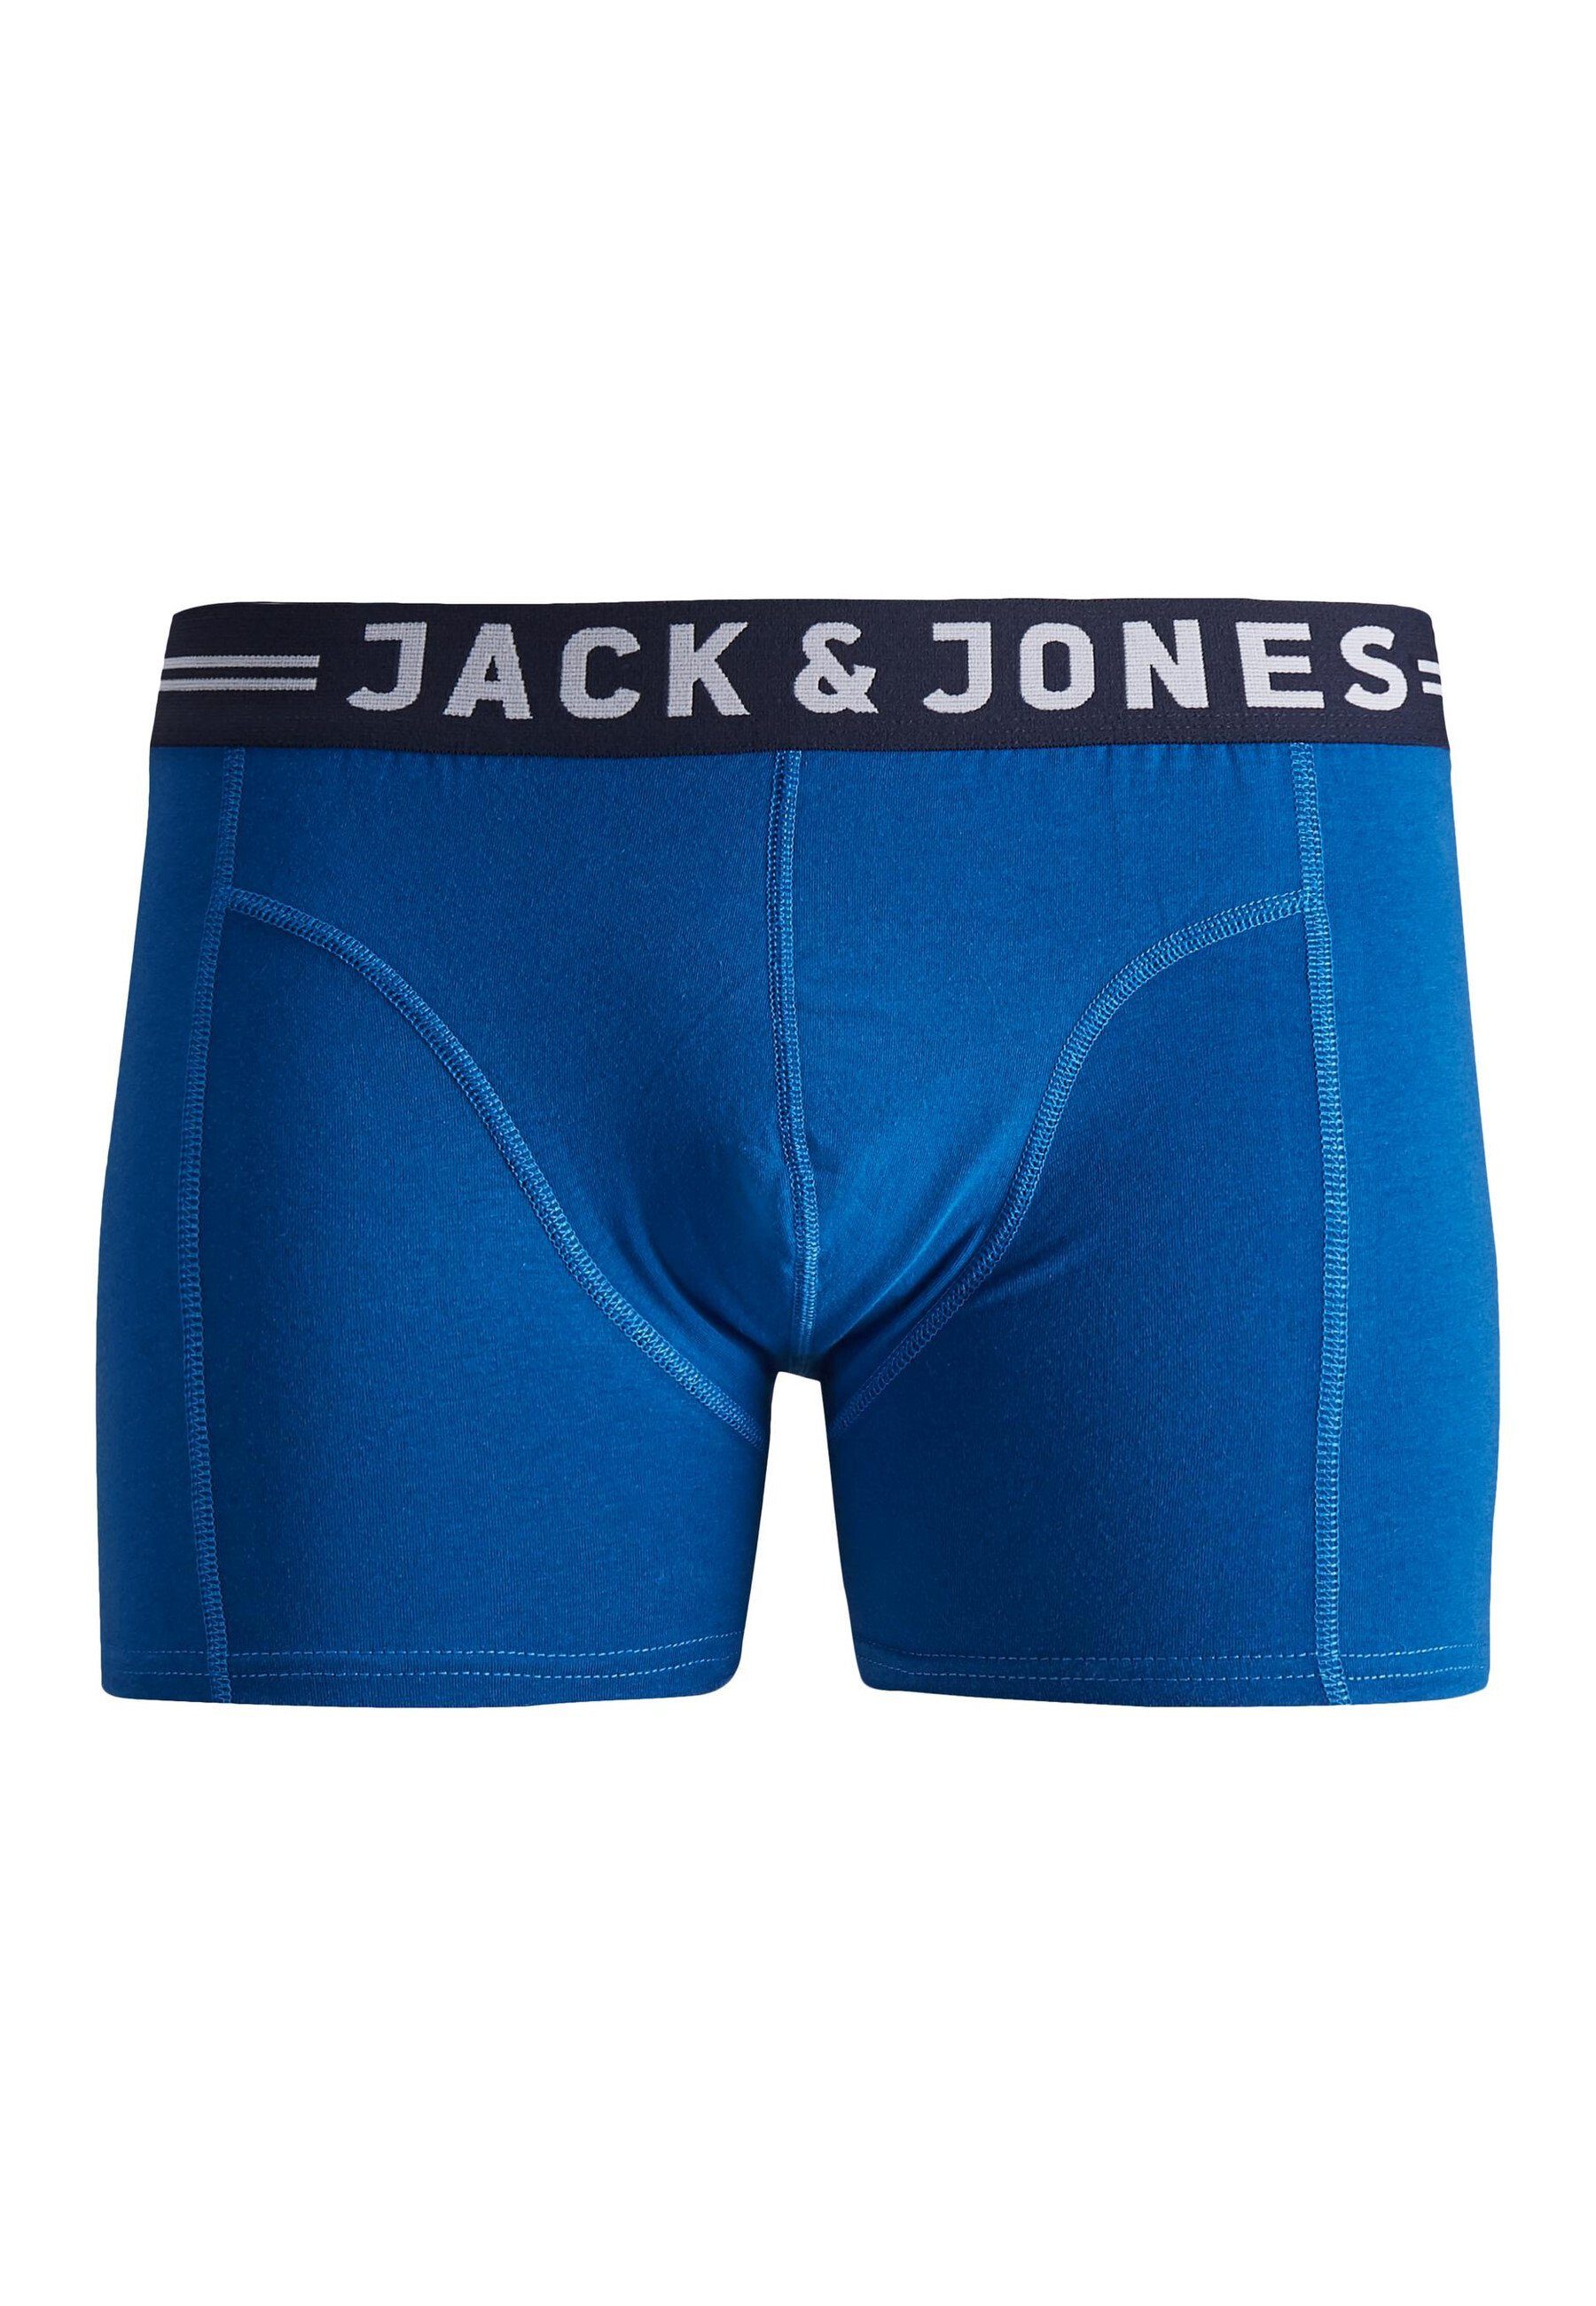 Jack & Jones Boxershorts Trunks Sense Mix Color Unterhose blau